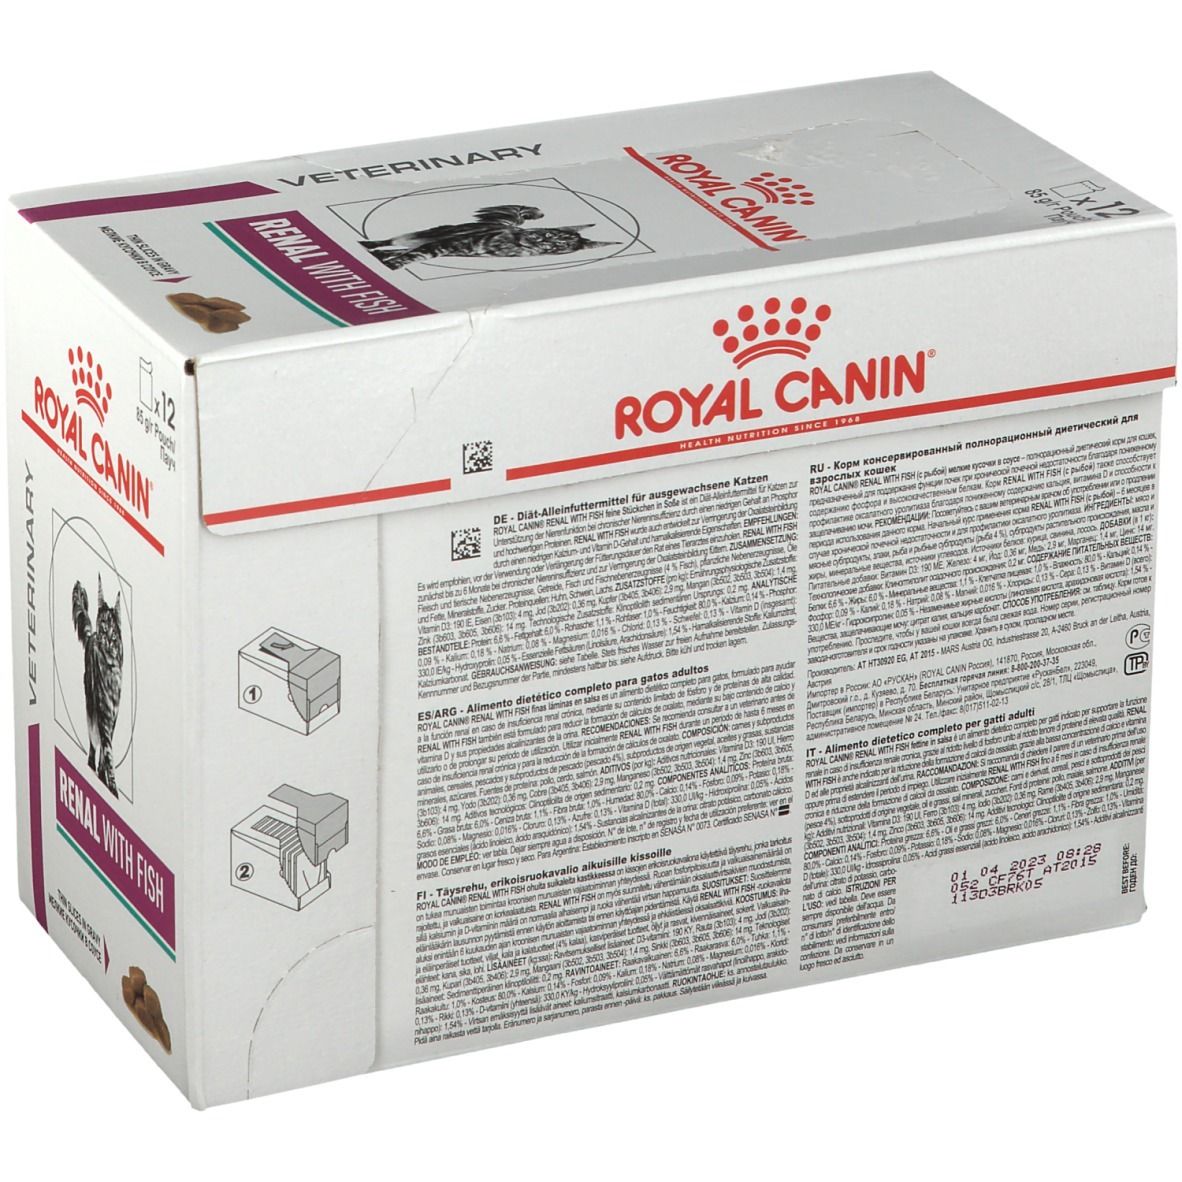 ROYAL CANIN® Veterinary Renal Fish